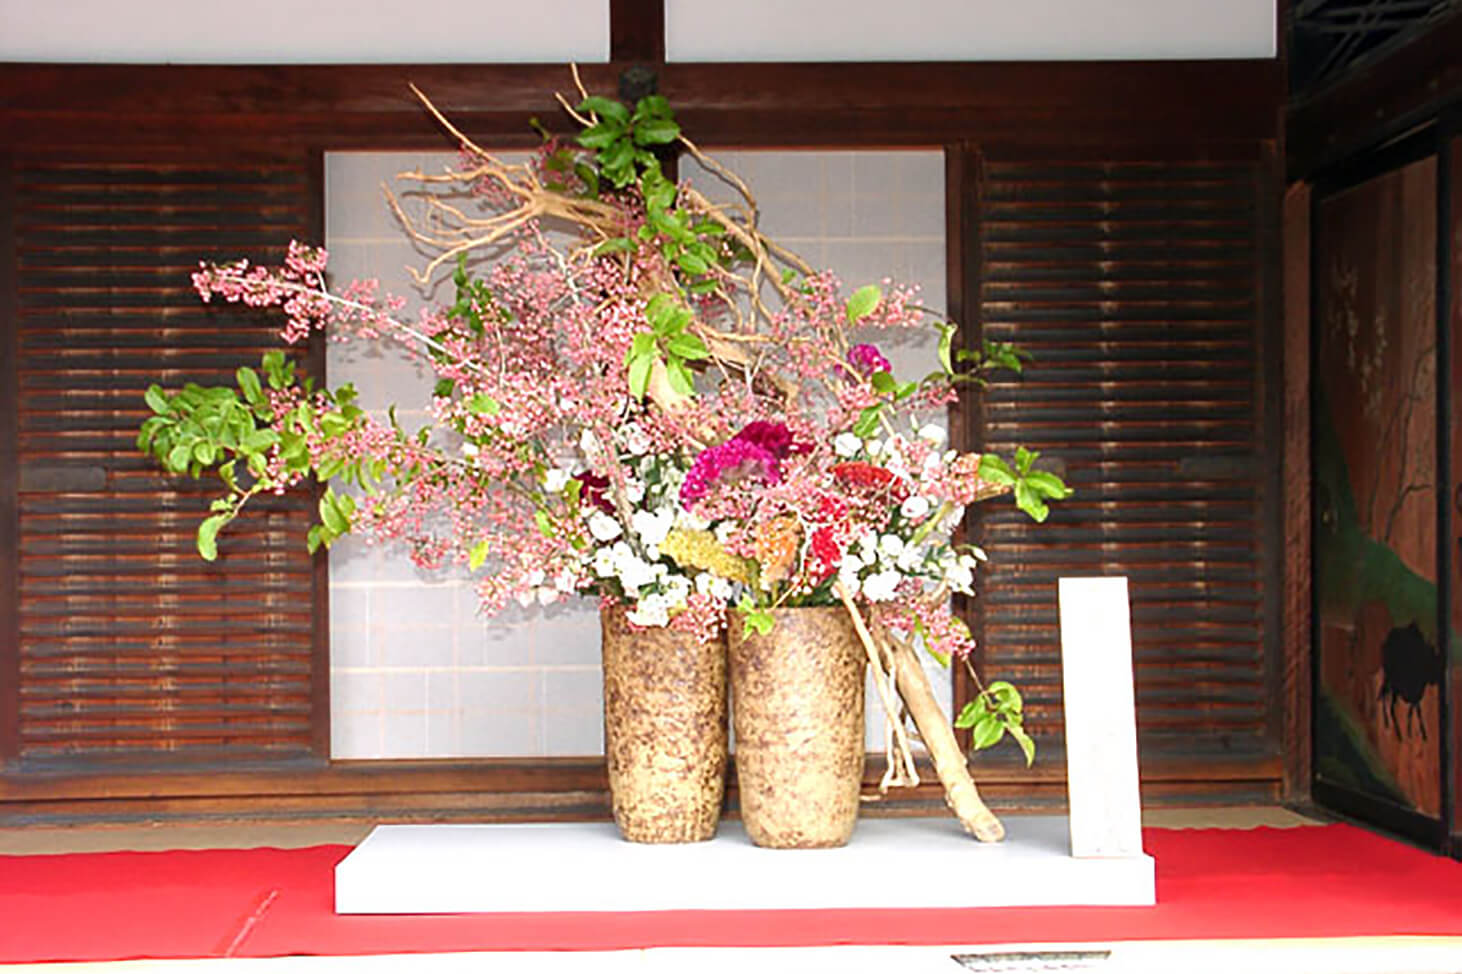 Sanzengo style Kodo (observe the art by aroma) Experience or Tsukiwa Misho style Flower Arrangement Experience